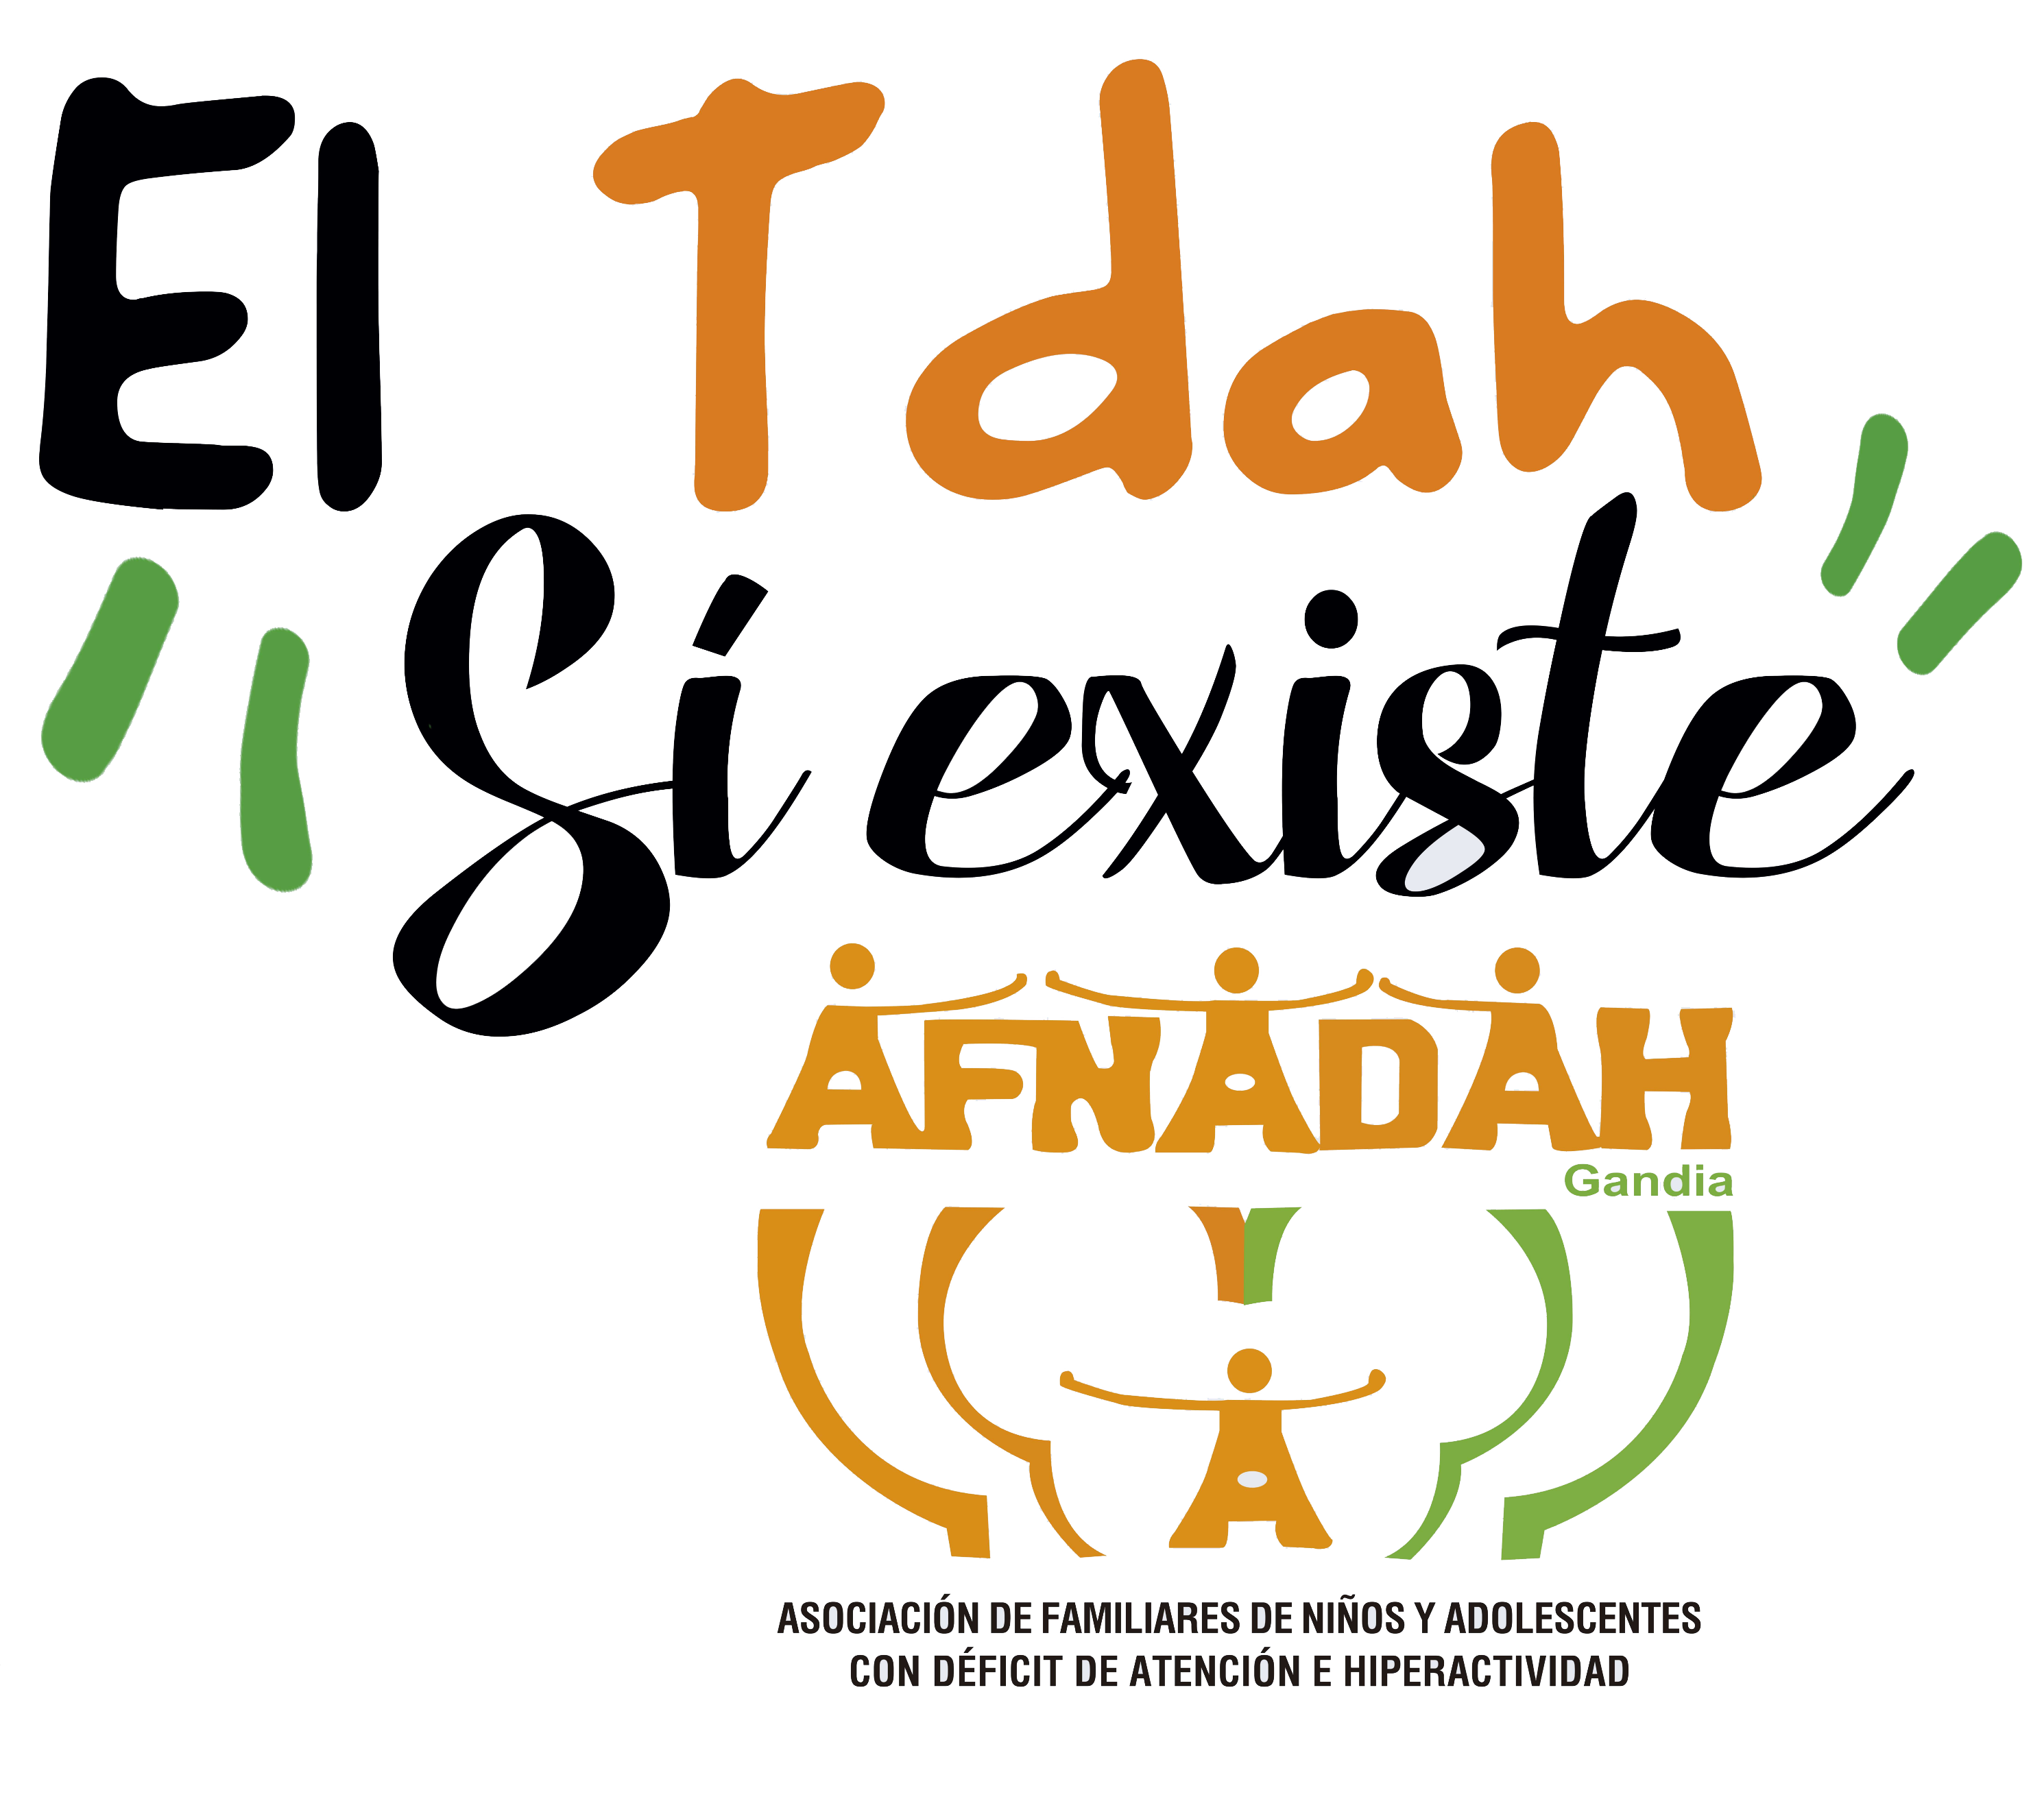 Afnadah